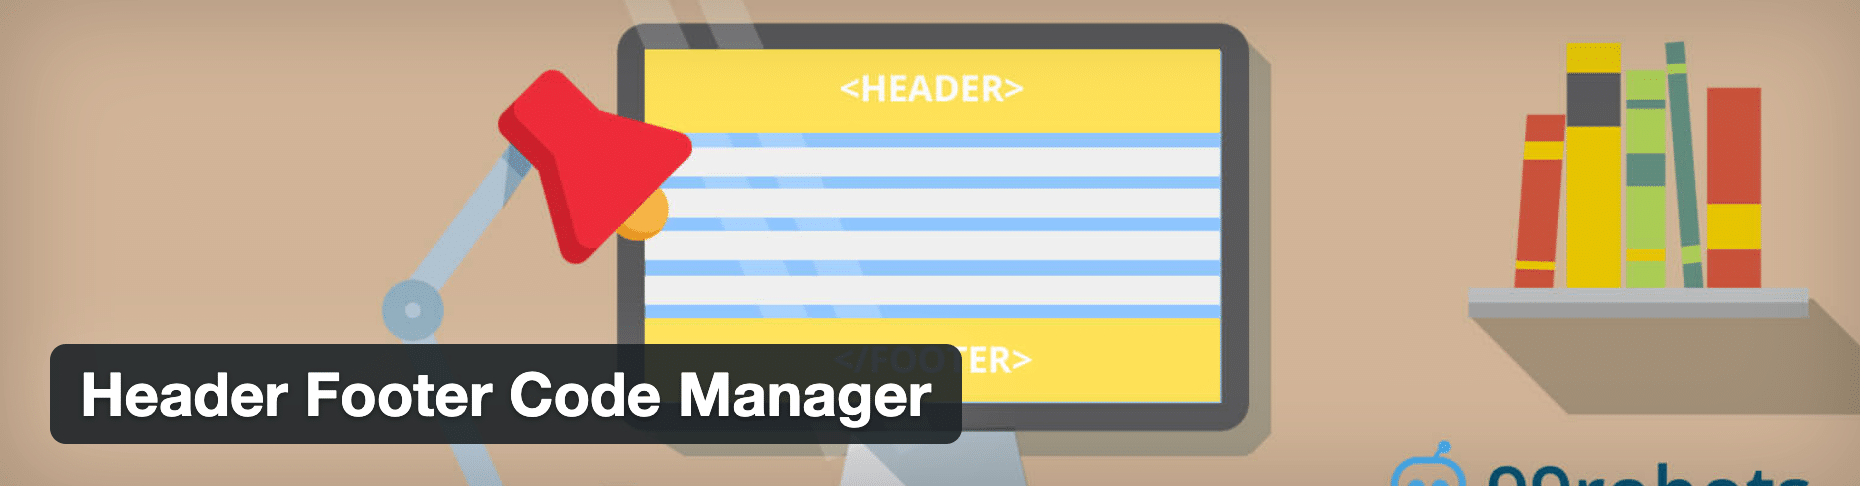 Header Footer Code Manager.